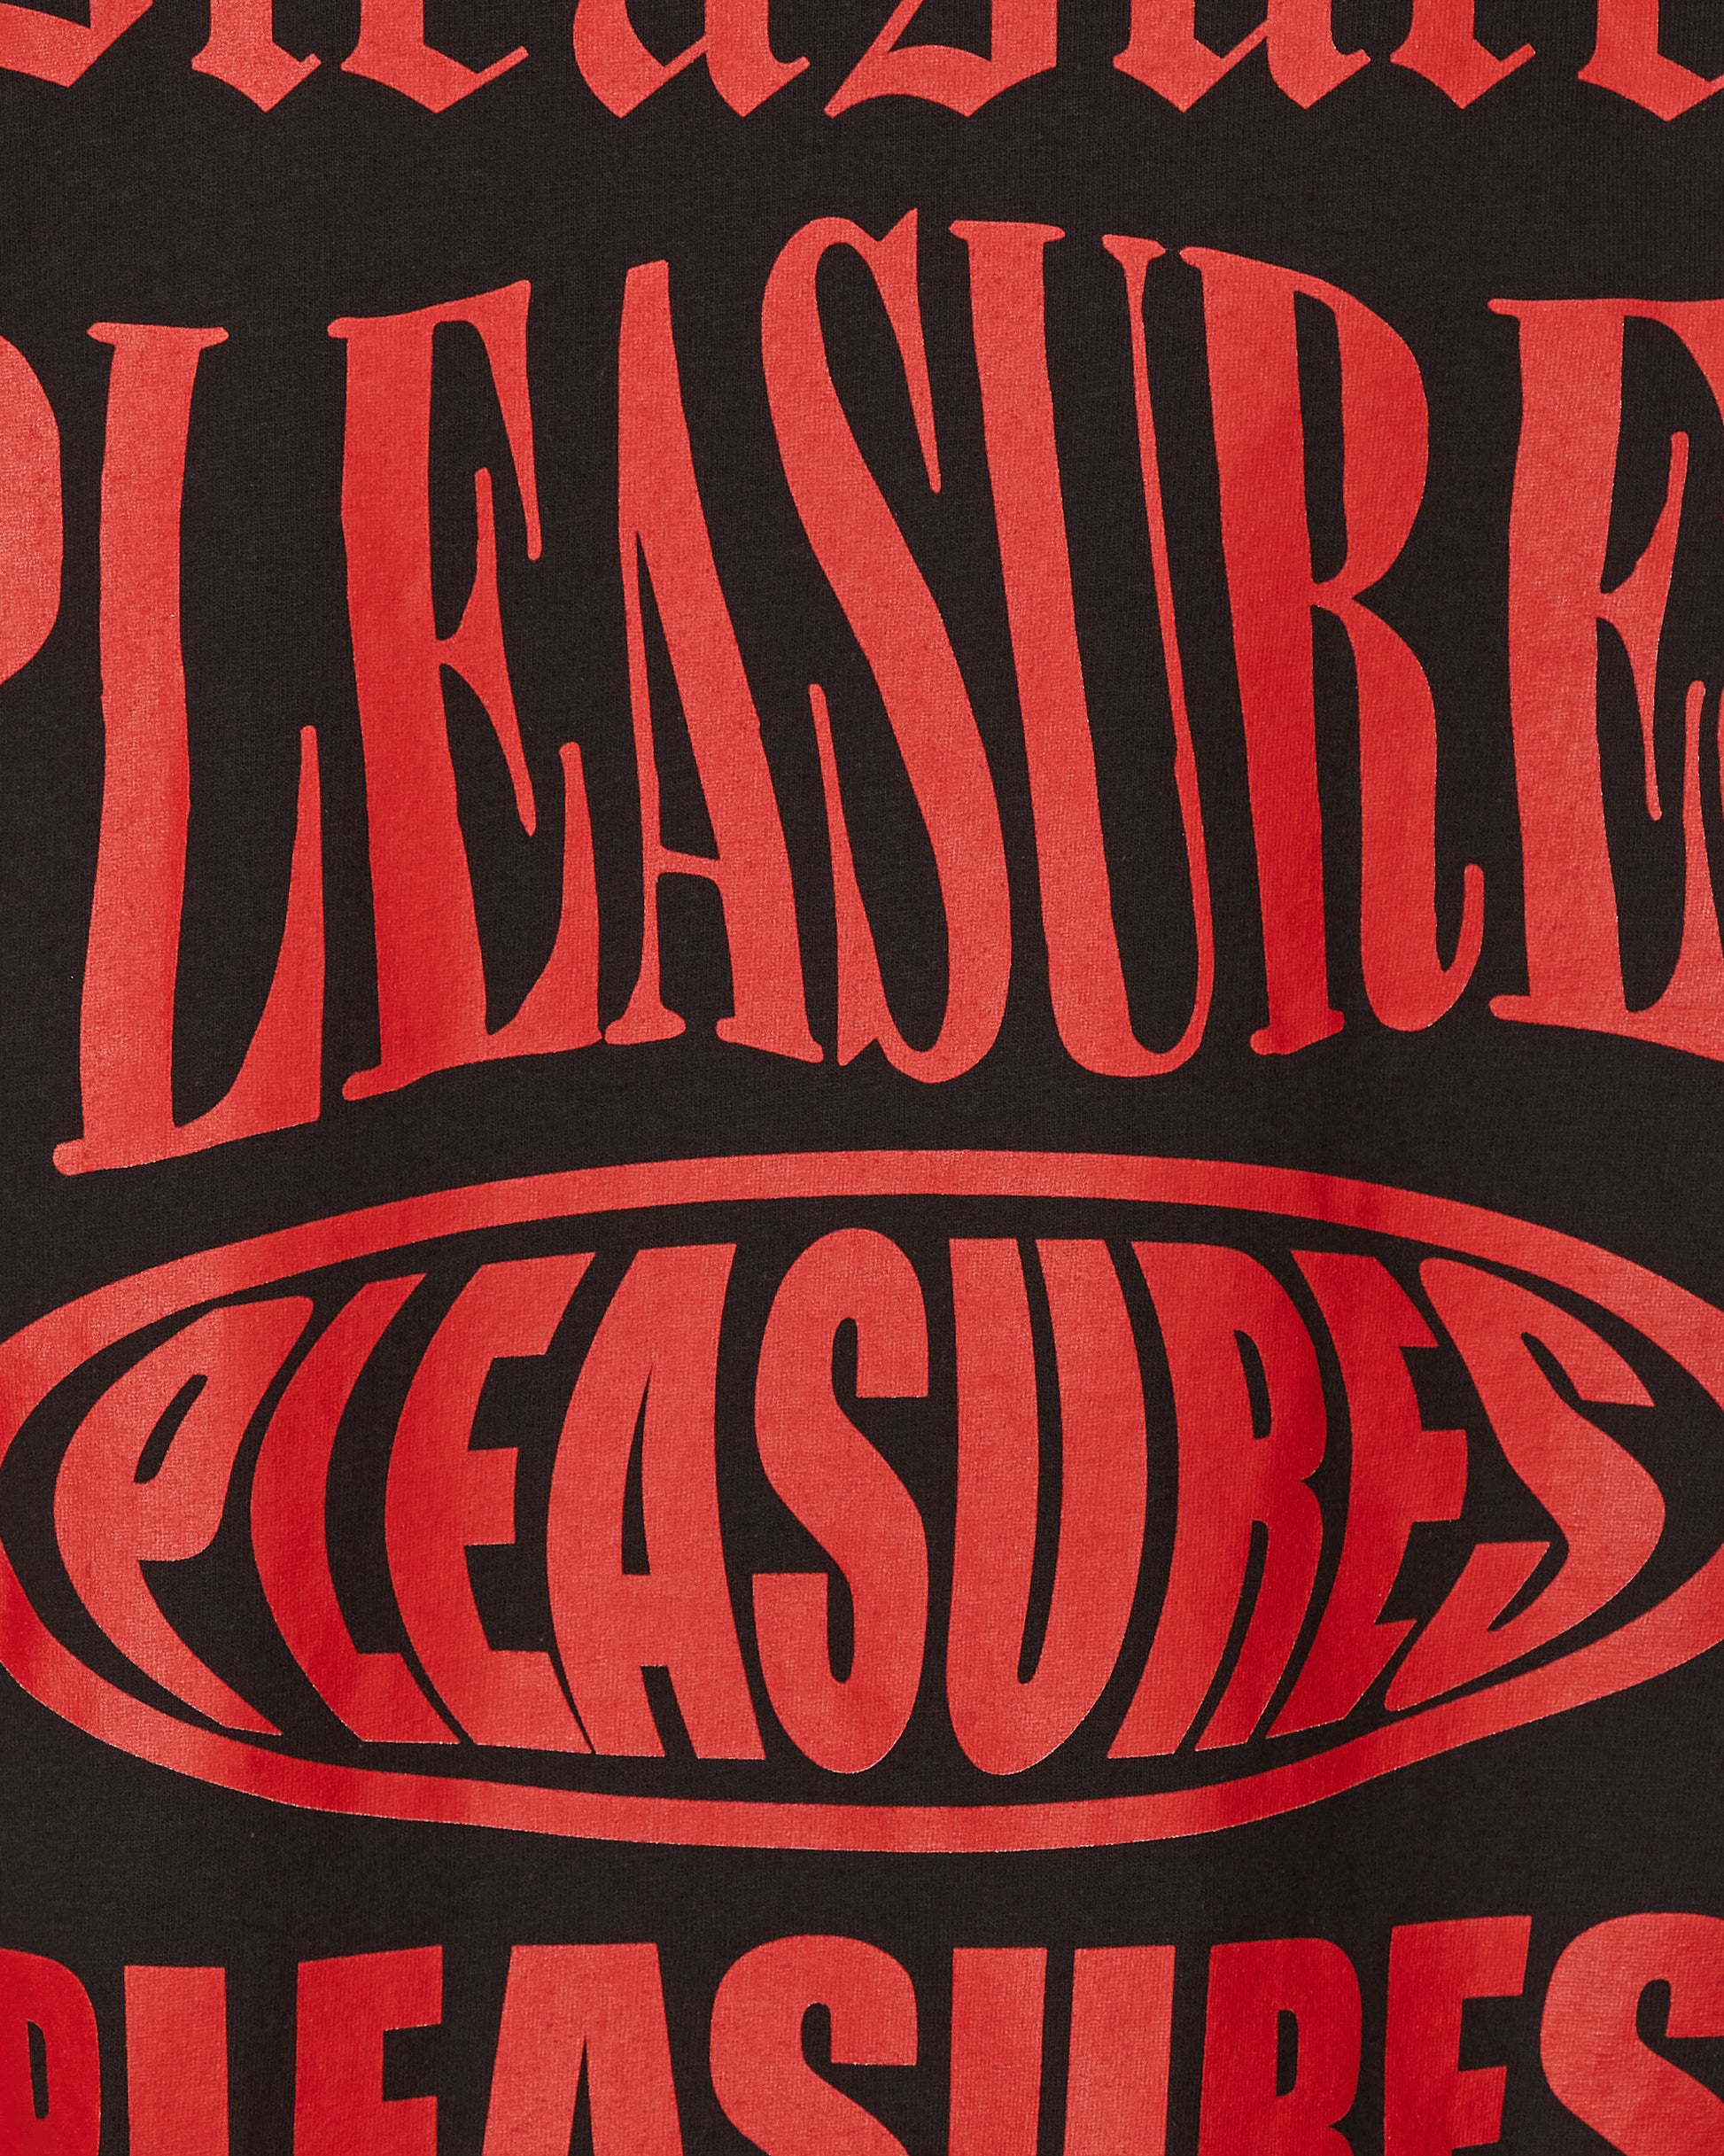 Pleasures Stack T-Shirt Black T-Shirts Shortsleeve 9233401 BLACK